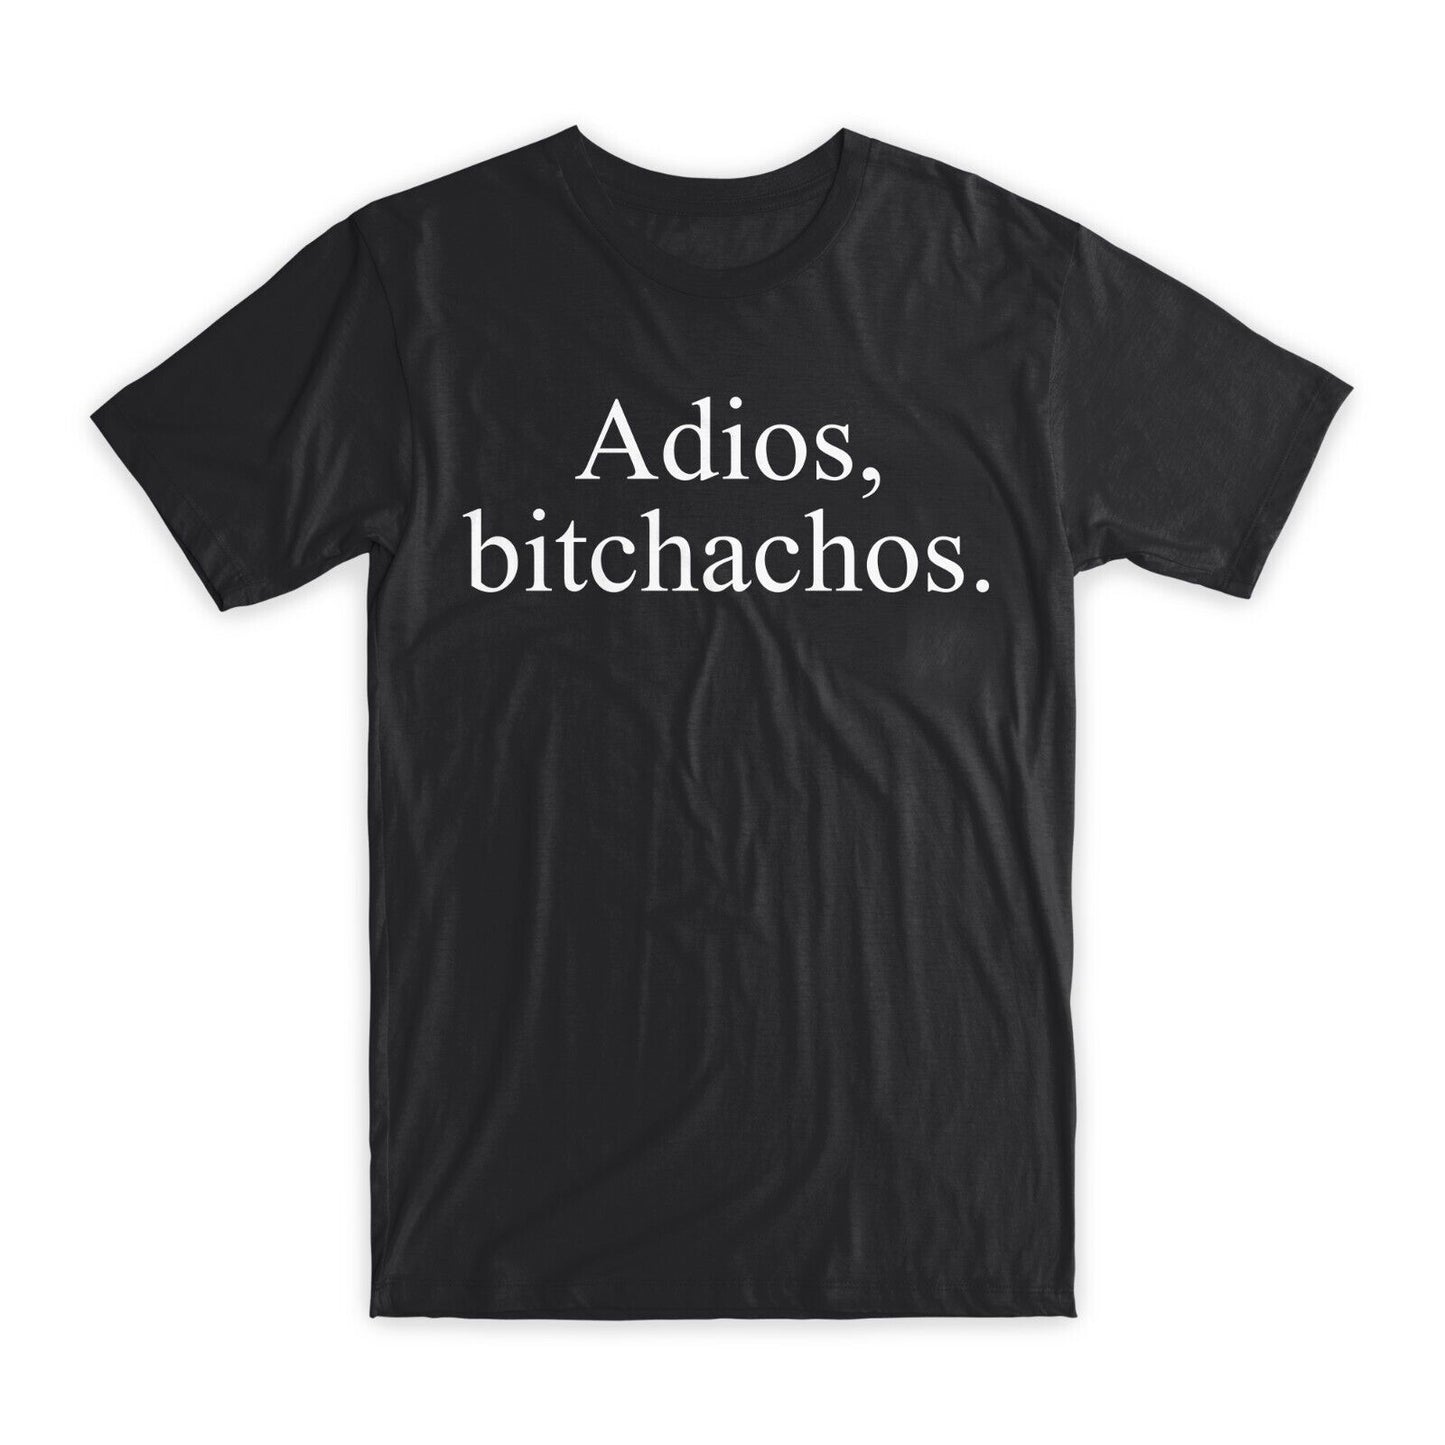 Adios Bitchachos T-Shirt Premium Cotton Funny Tees, Black/Gray NEW